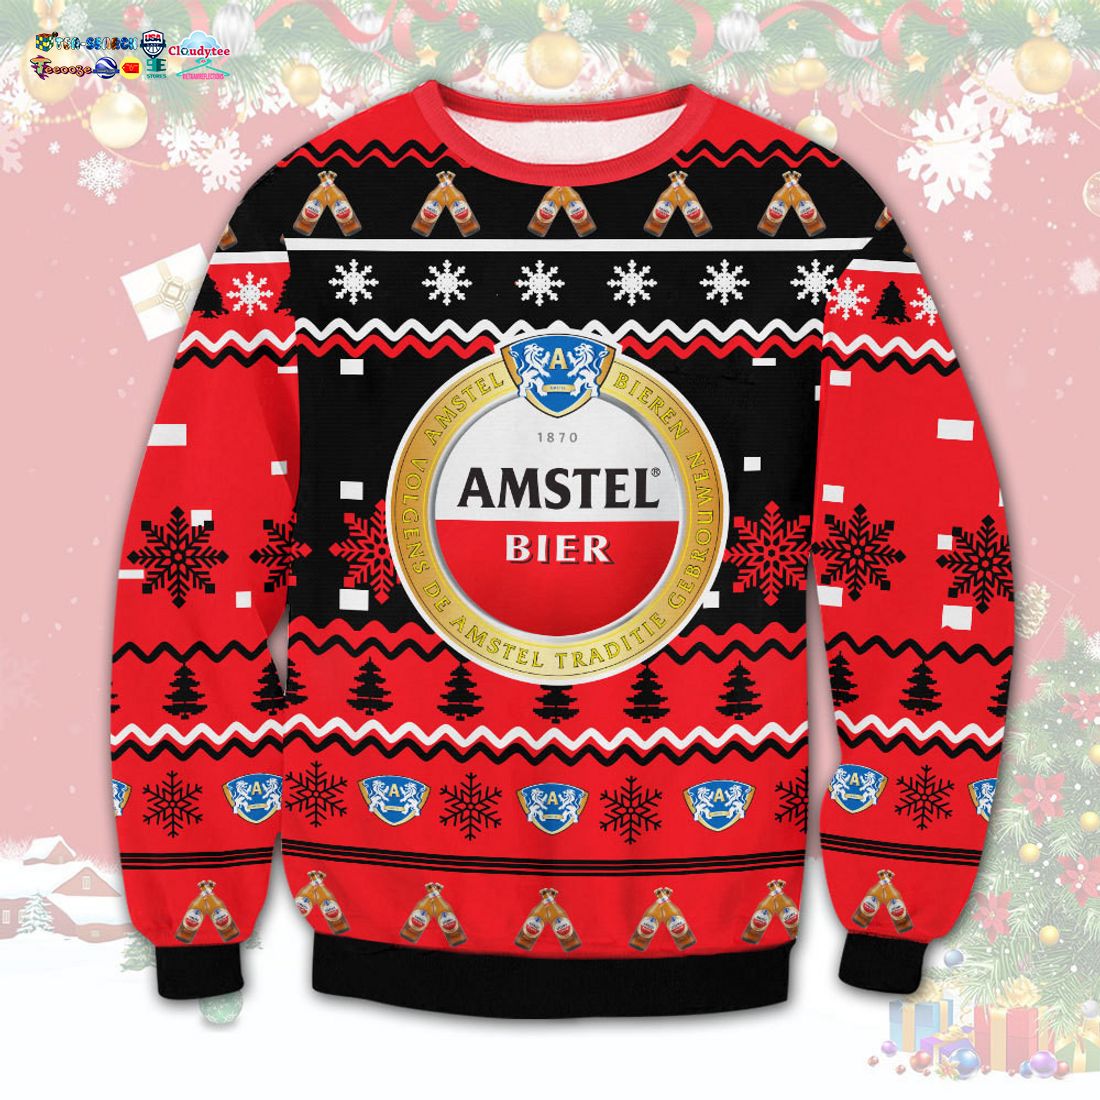 Amstel Ugly Christmas Sweater